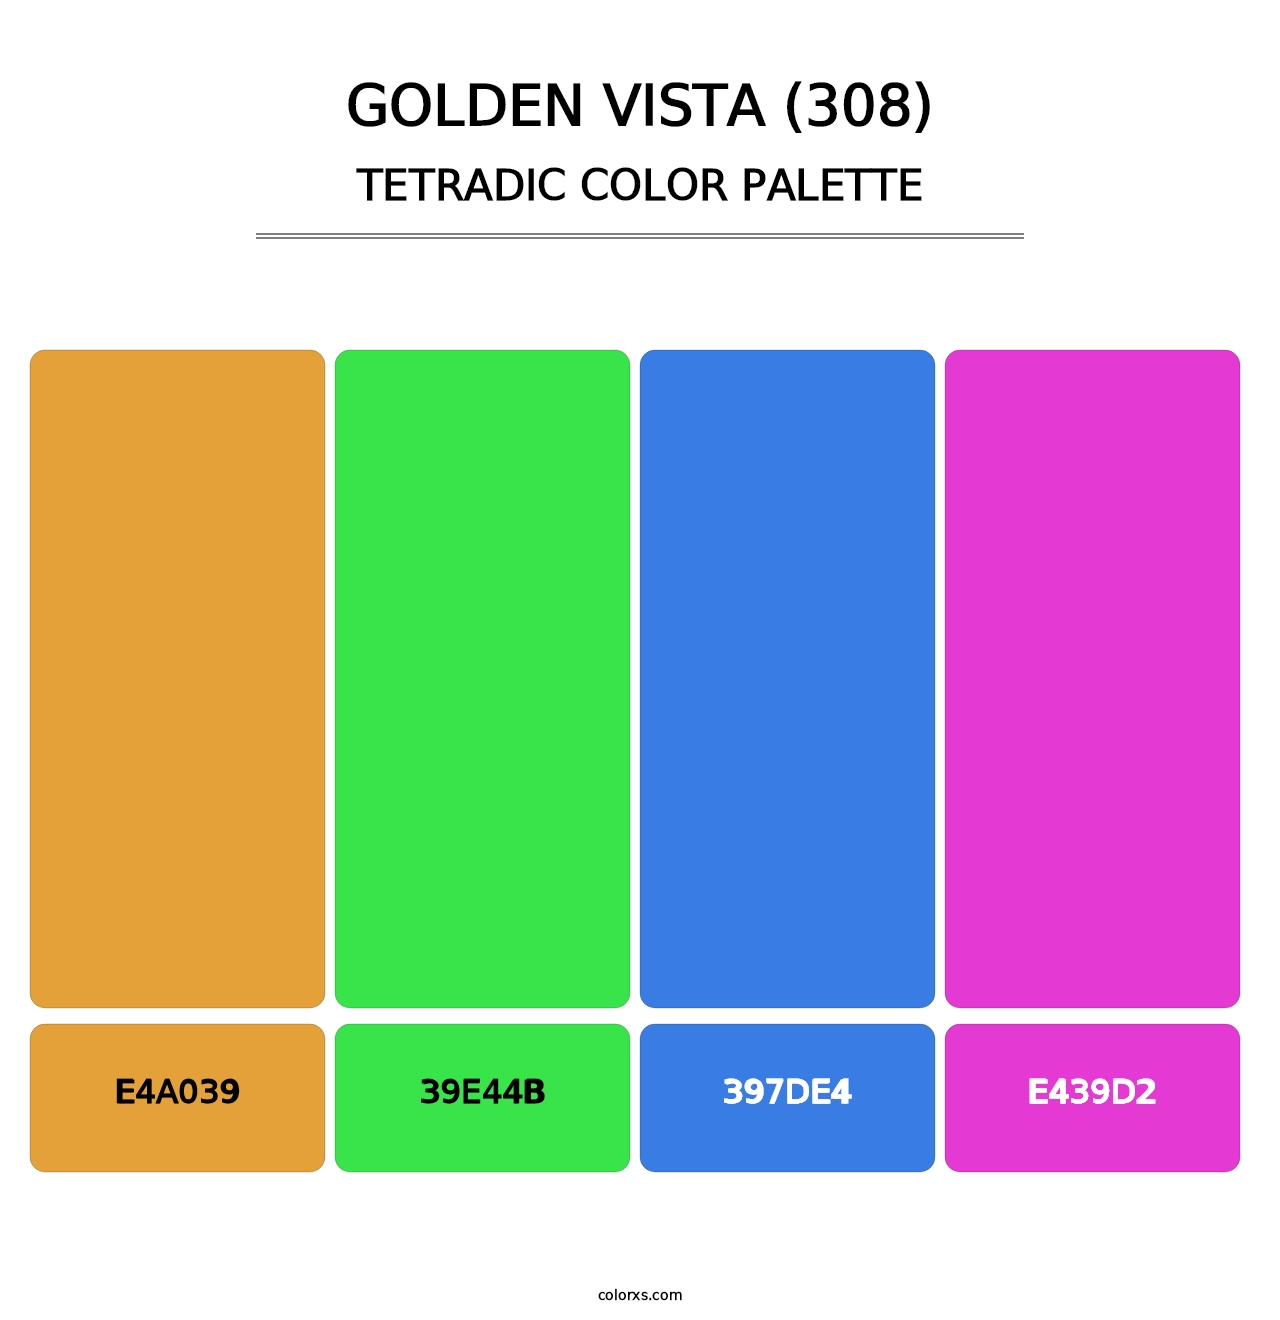 Golden Vista (308) - Tetradic Color Palette